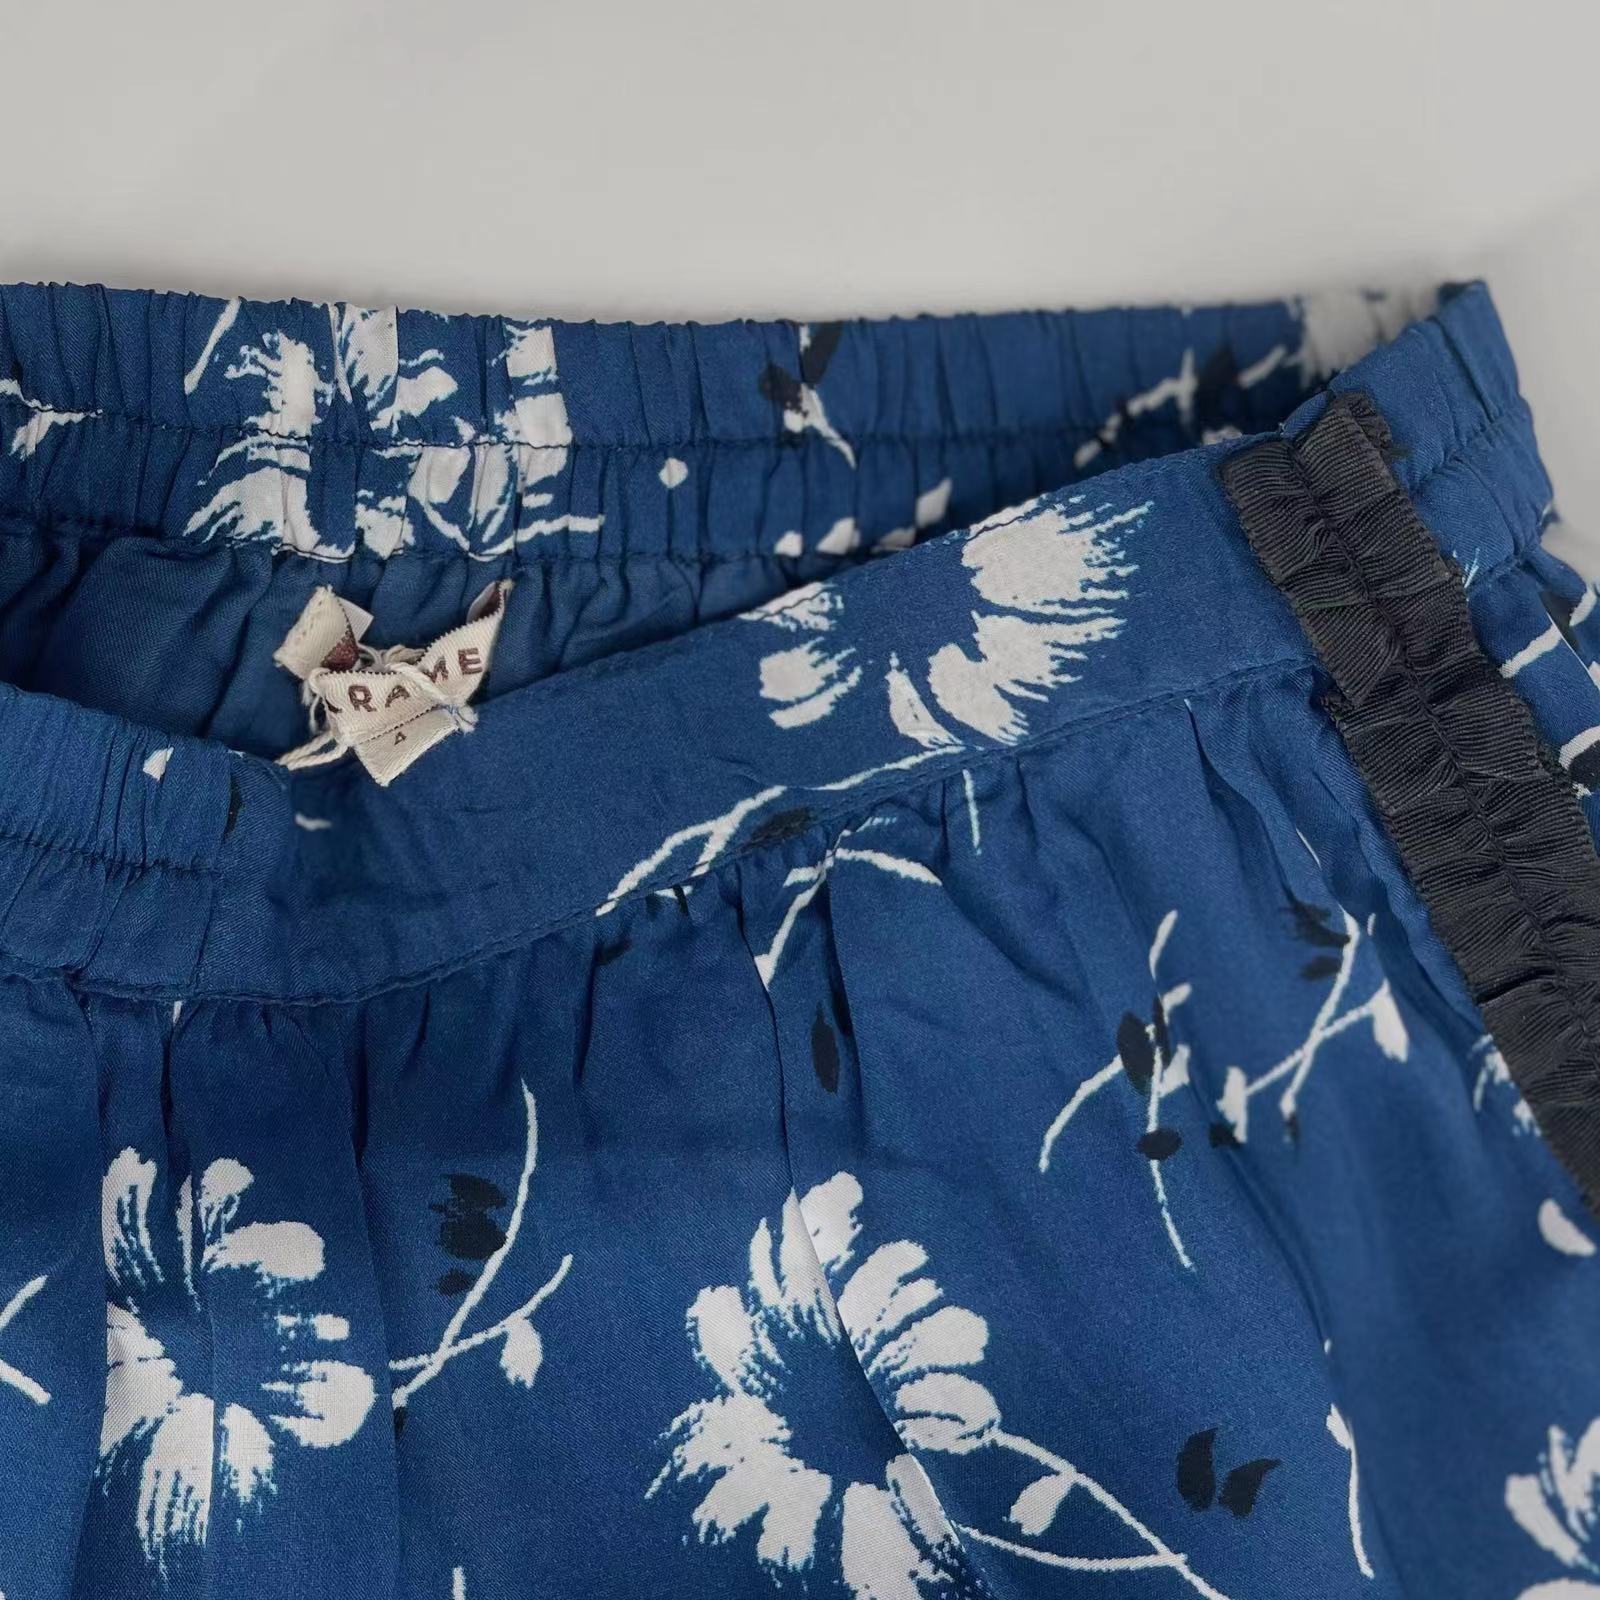 Girls Blue Printed Skirt